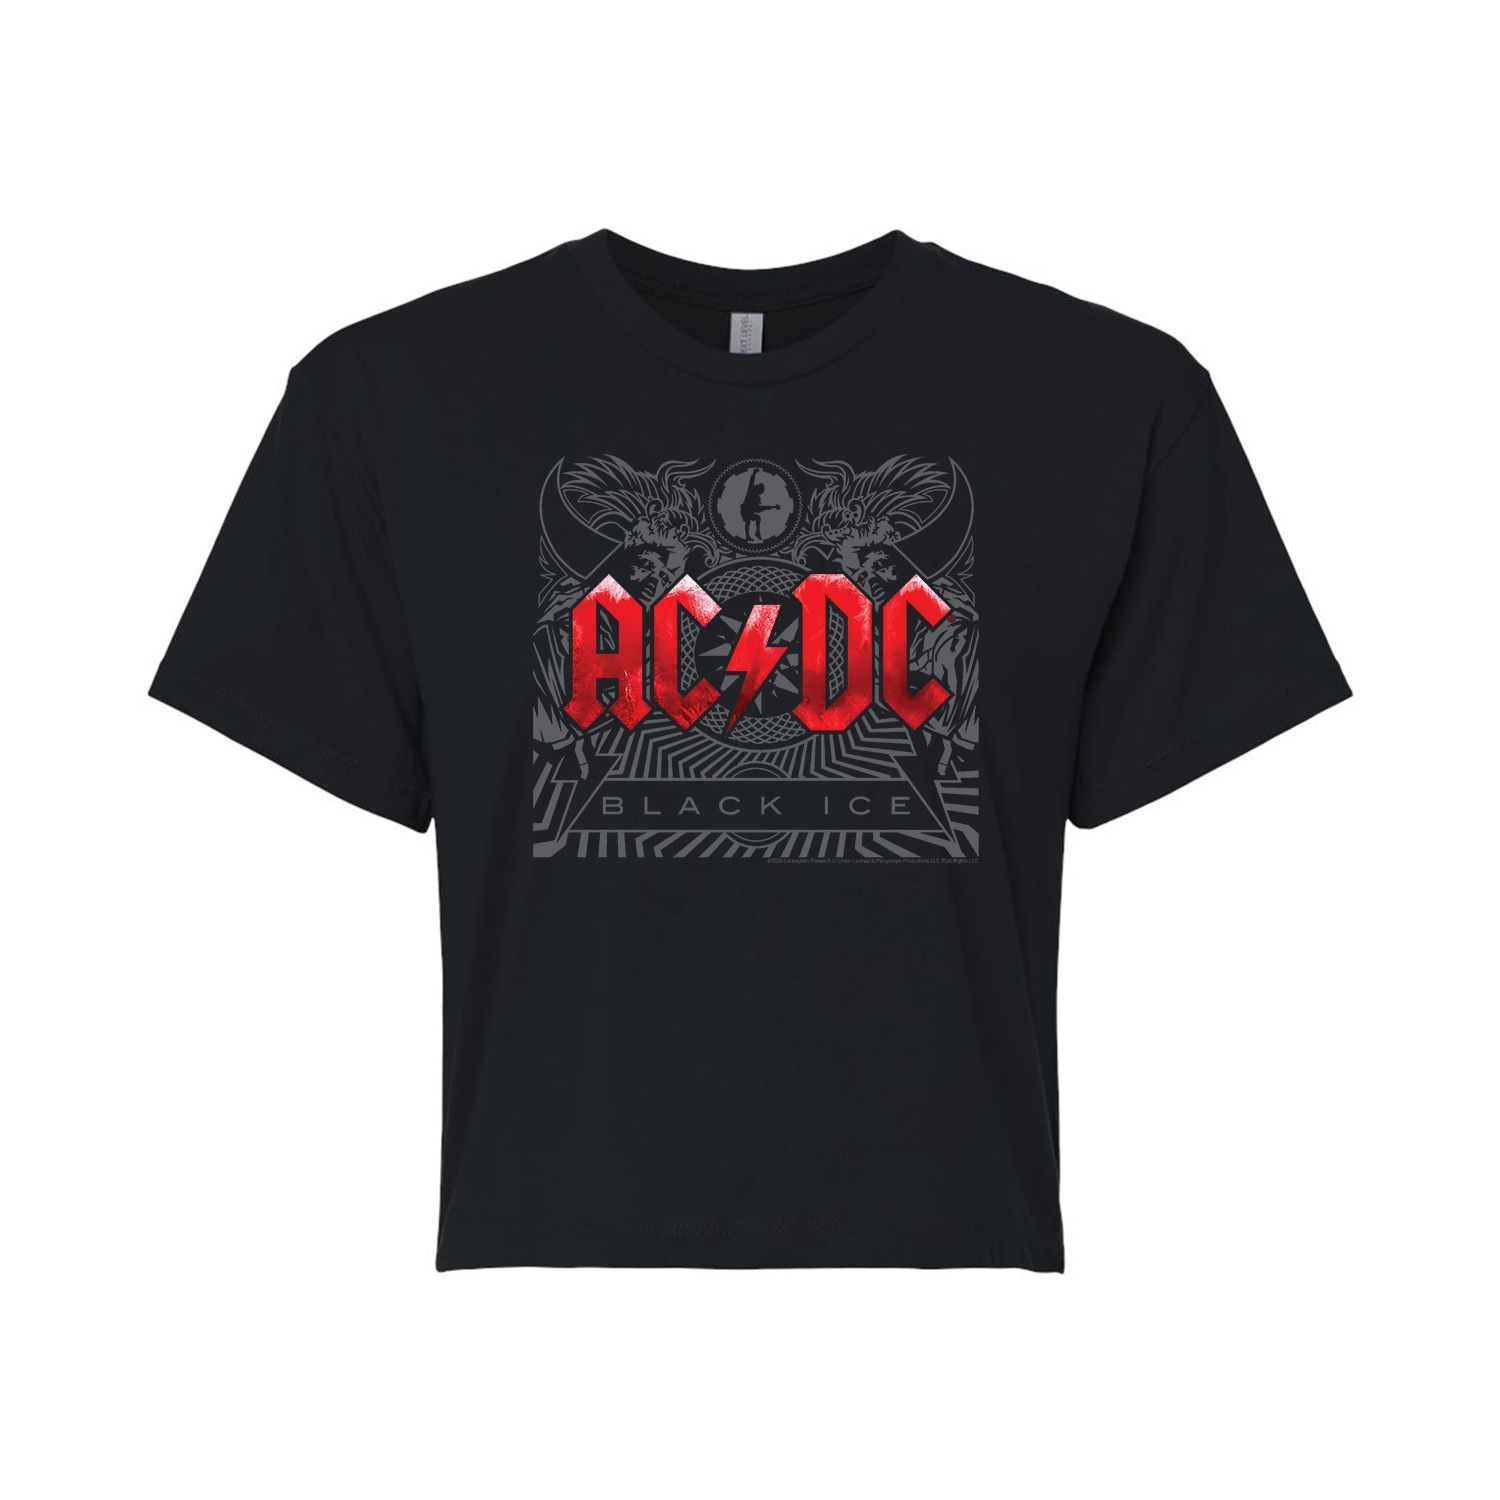 Укороченная футболка с рисунком AC/DC Black Ice для юниоров Licensed Character футболка ac dc black ice